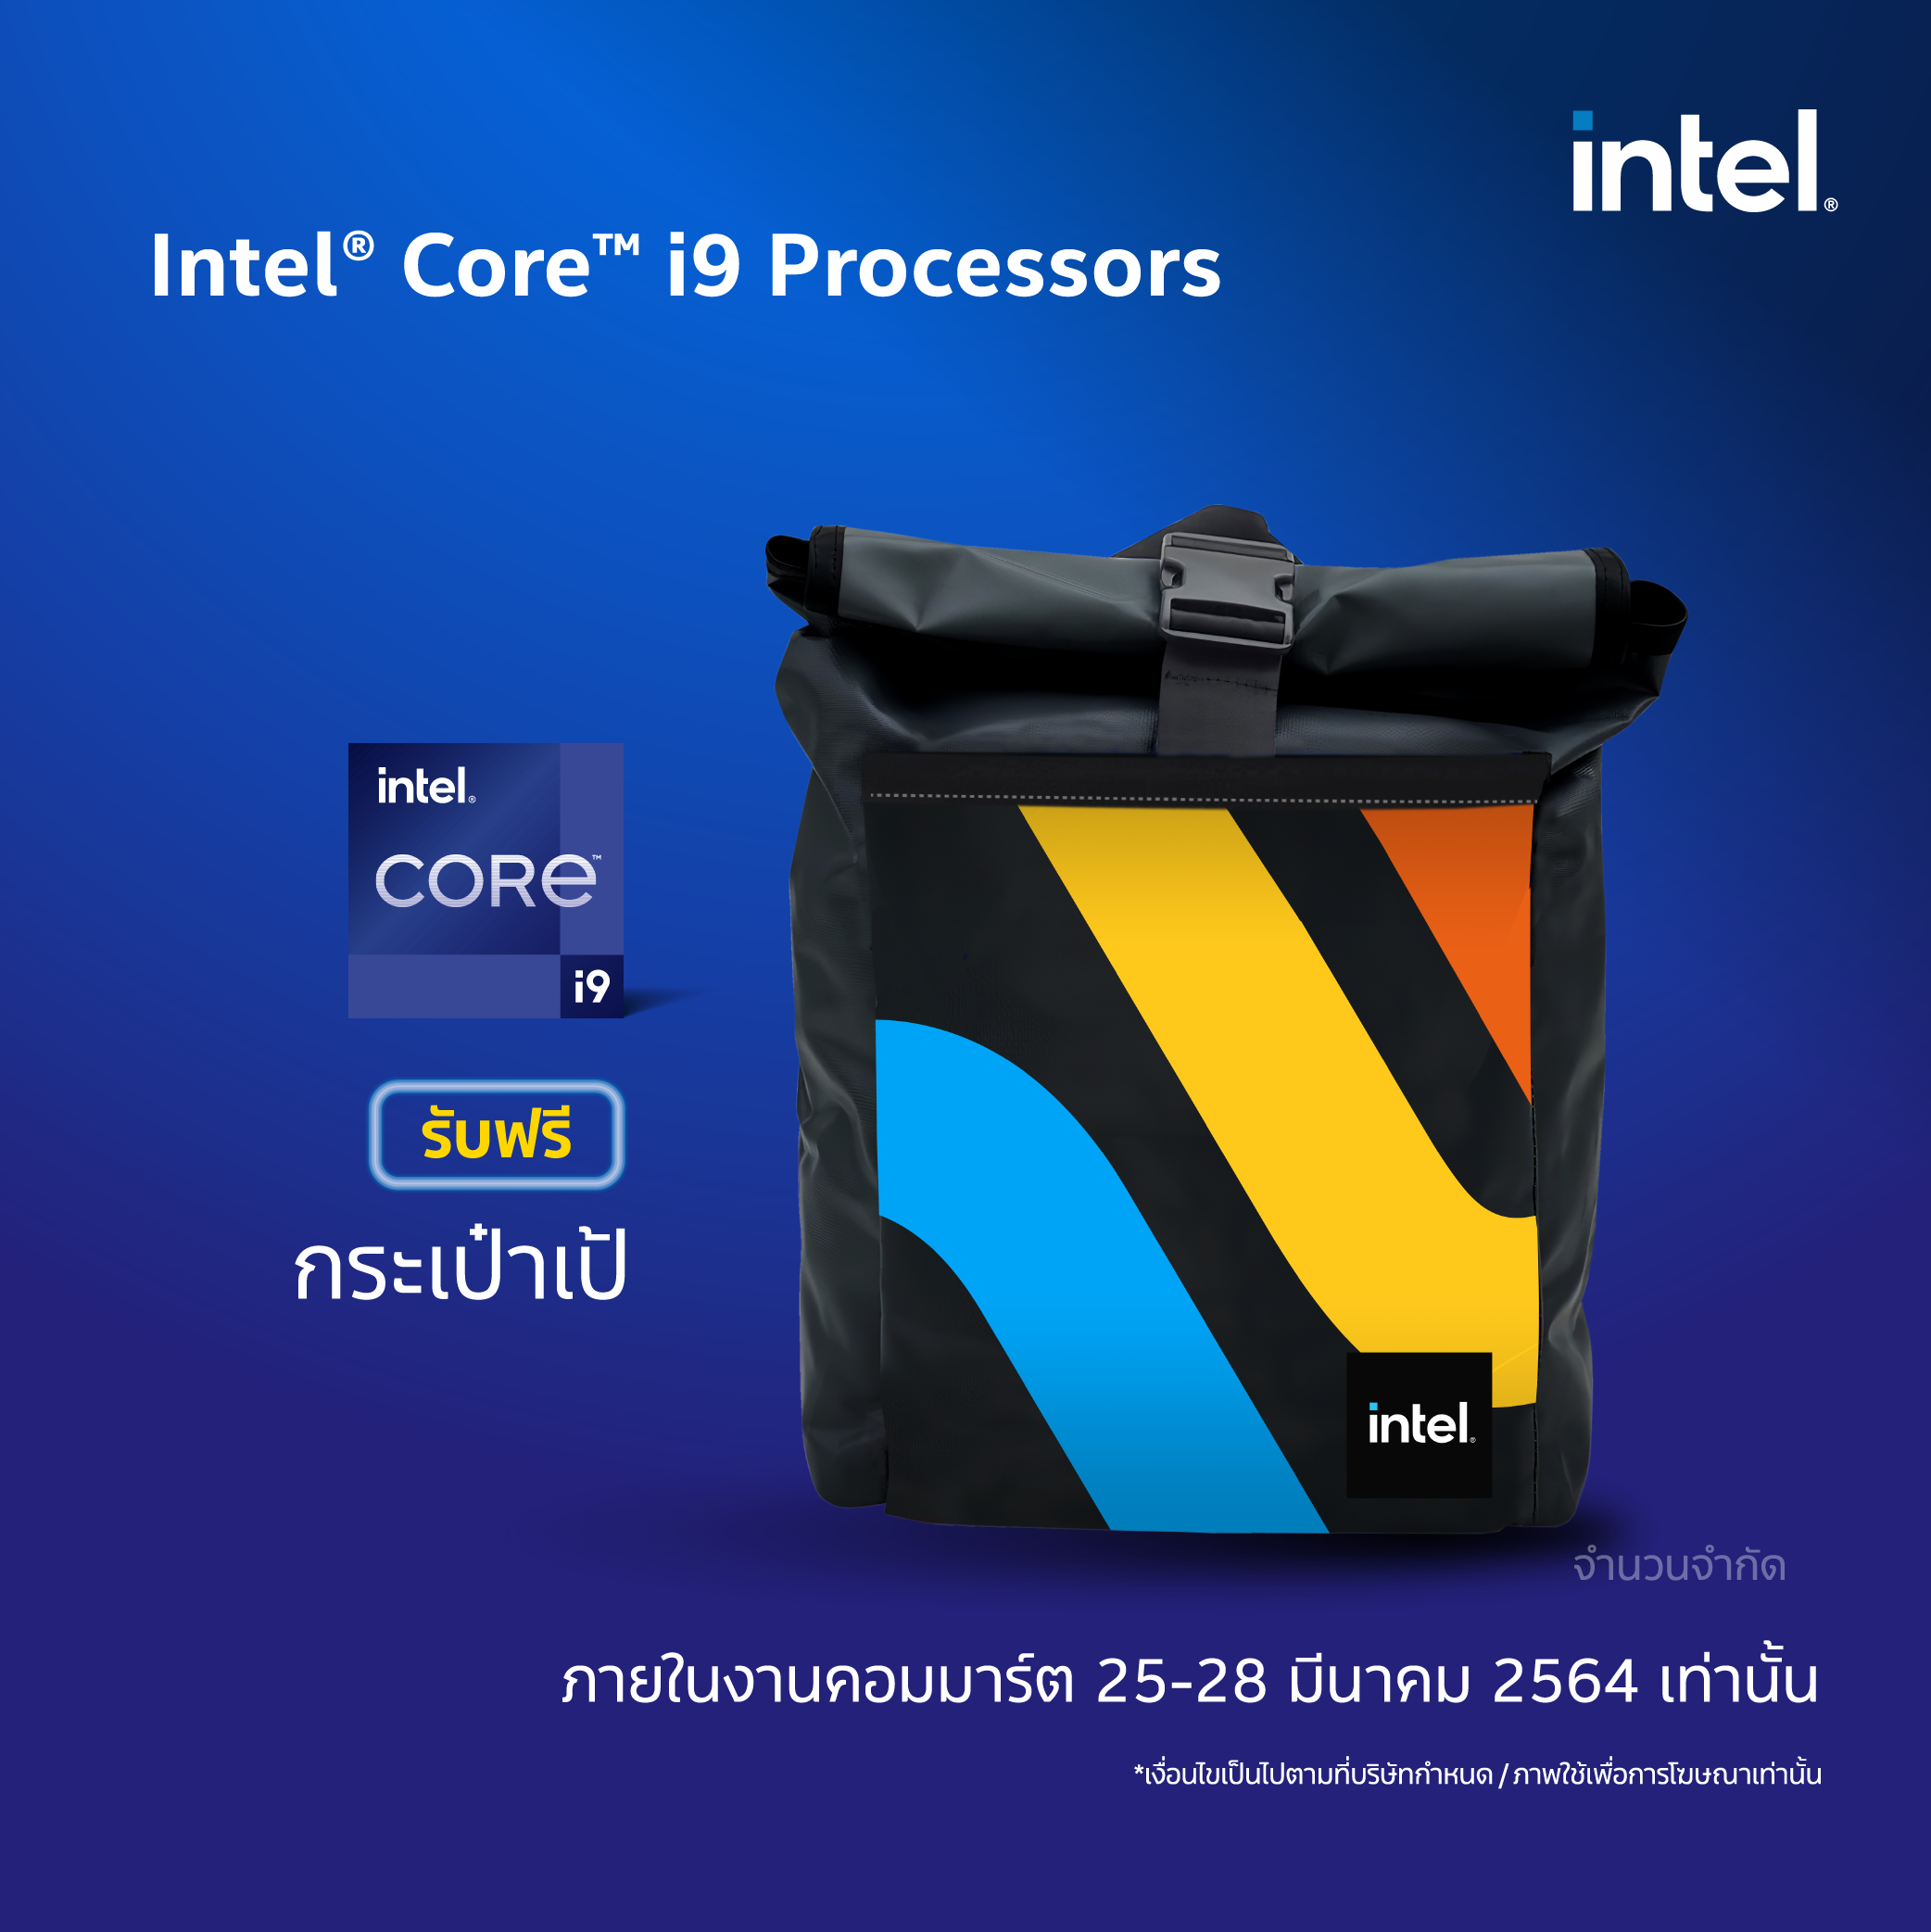 intel commart 7 Intel จัดโปรโมชั่นสุดพิเศษในงานคอมมาร์ท ไบเทค บางนา ตั้งแต่วันนี้ ถึง 28 มีนาคม 2564 รับของแถมสุดพิเศษมากมายเมื่อซื้อผลิตภัณฑ์จากทาง Intel 